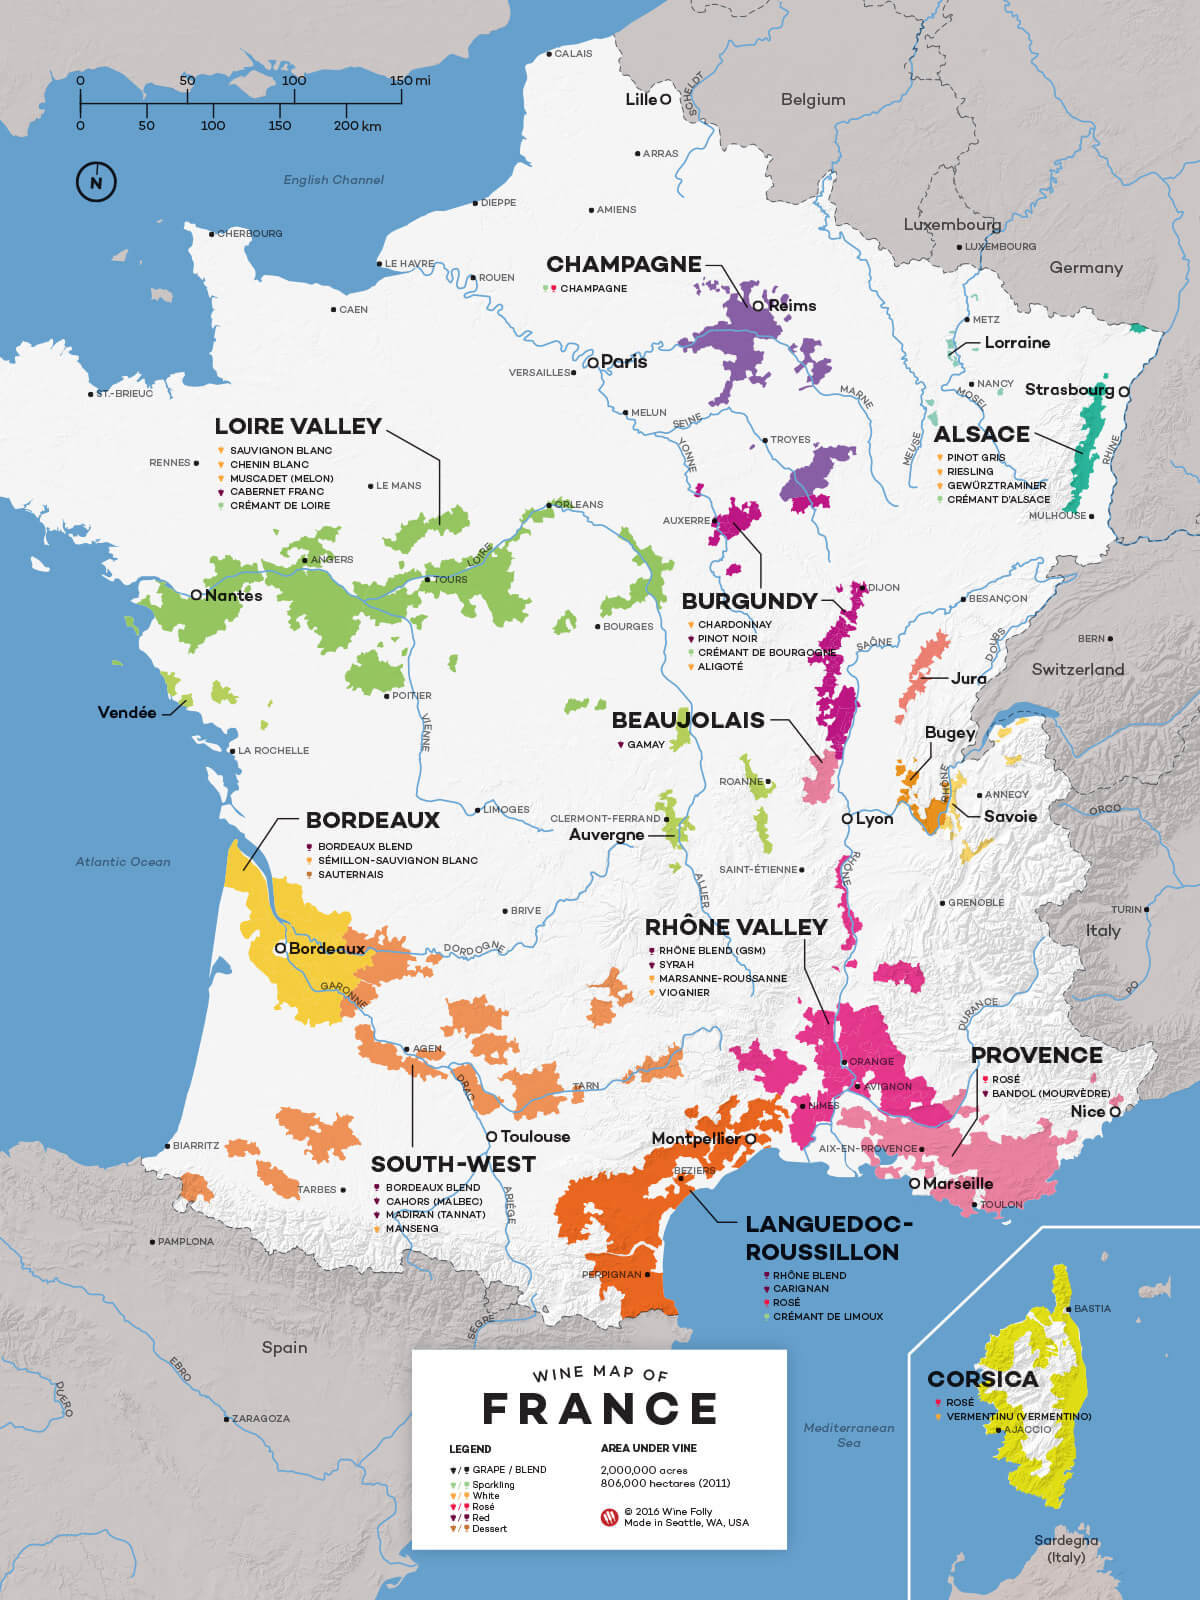 France-Wine-Map-by-WineFolly-2